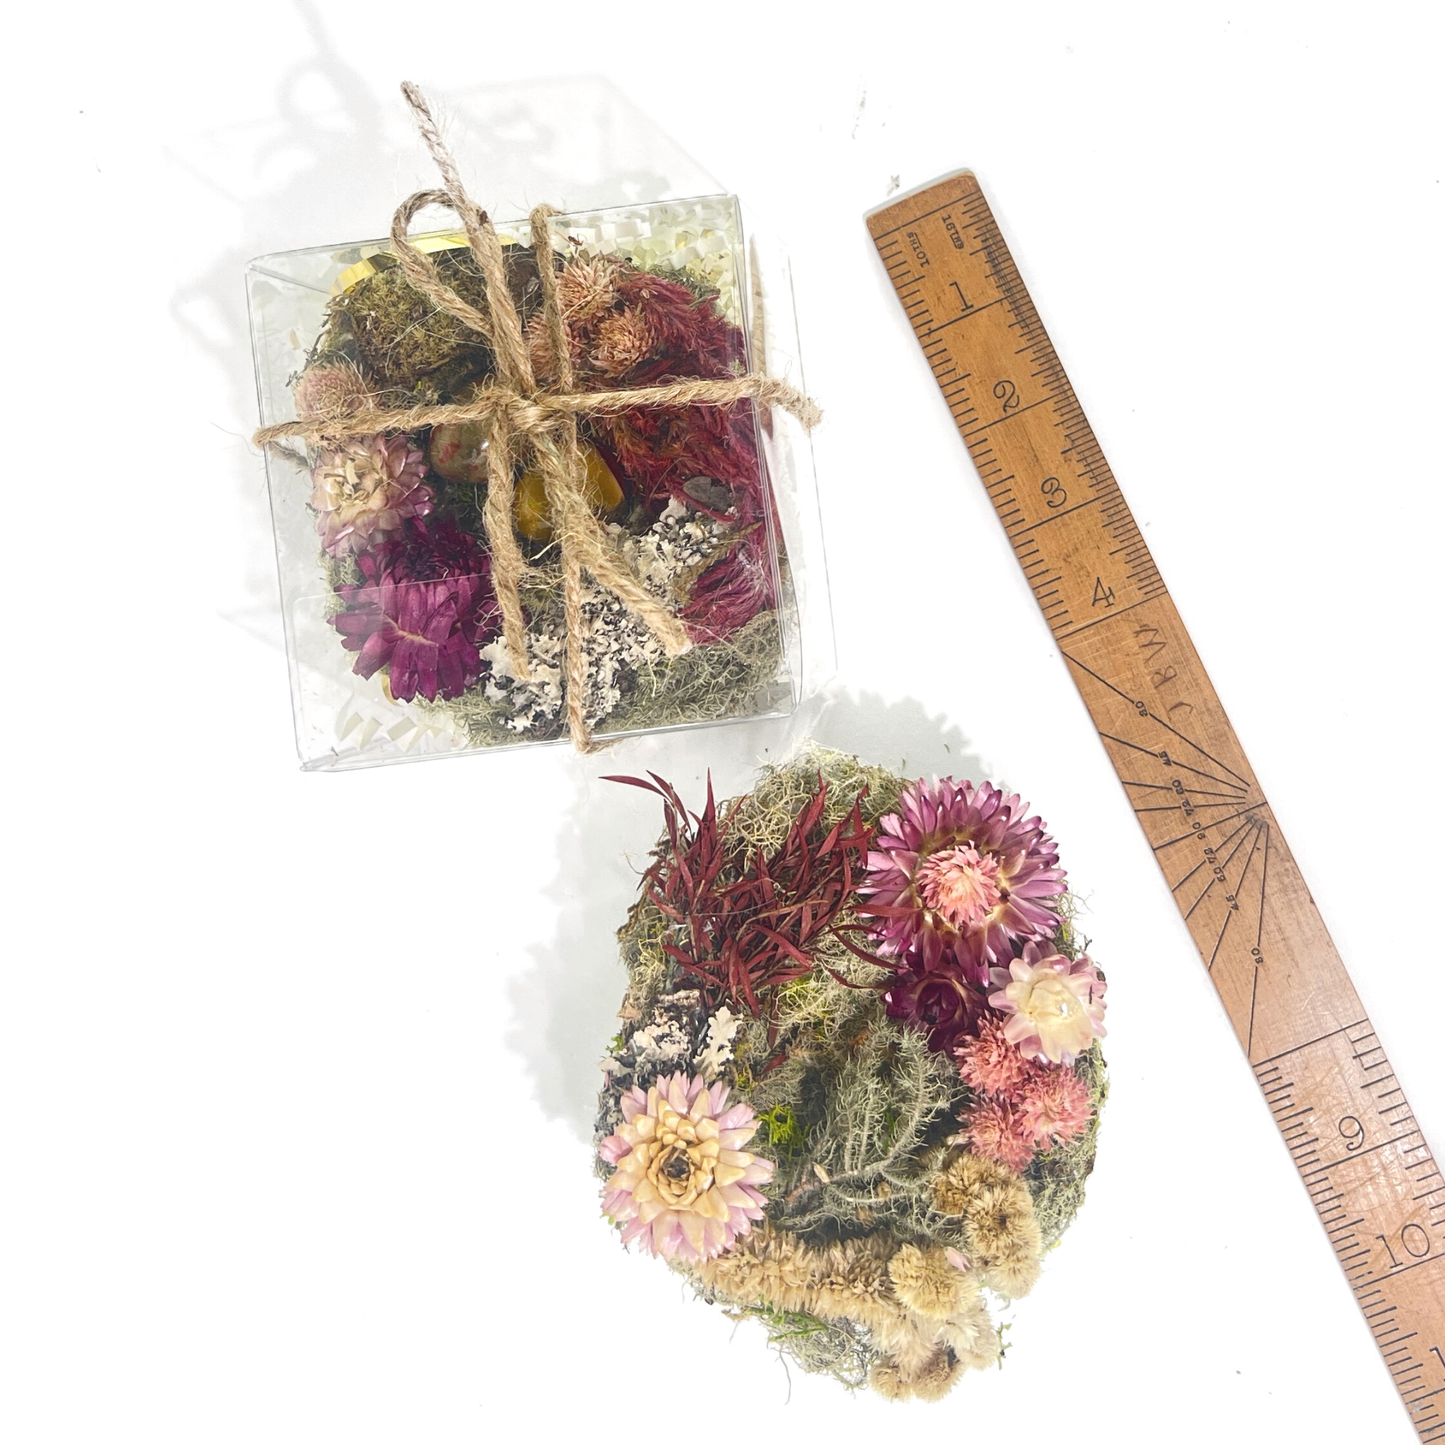 Garden Nest Crystal Altar With Dried Flowers Gemstone Eggs: Rose